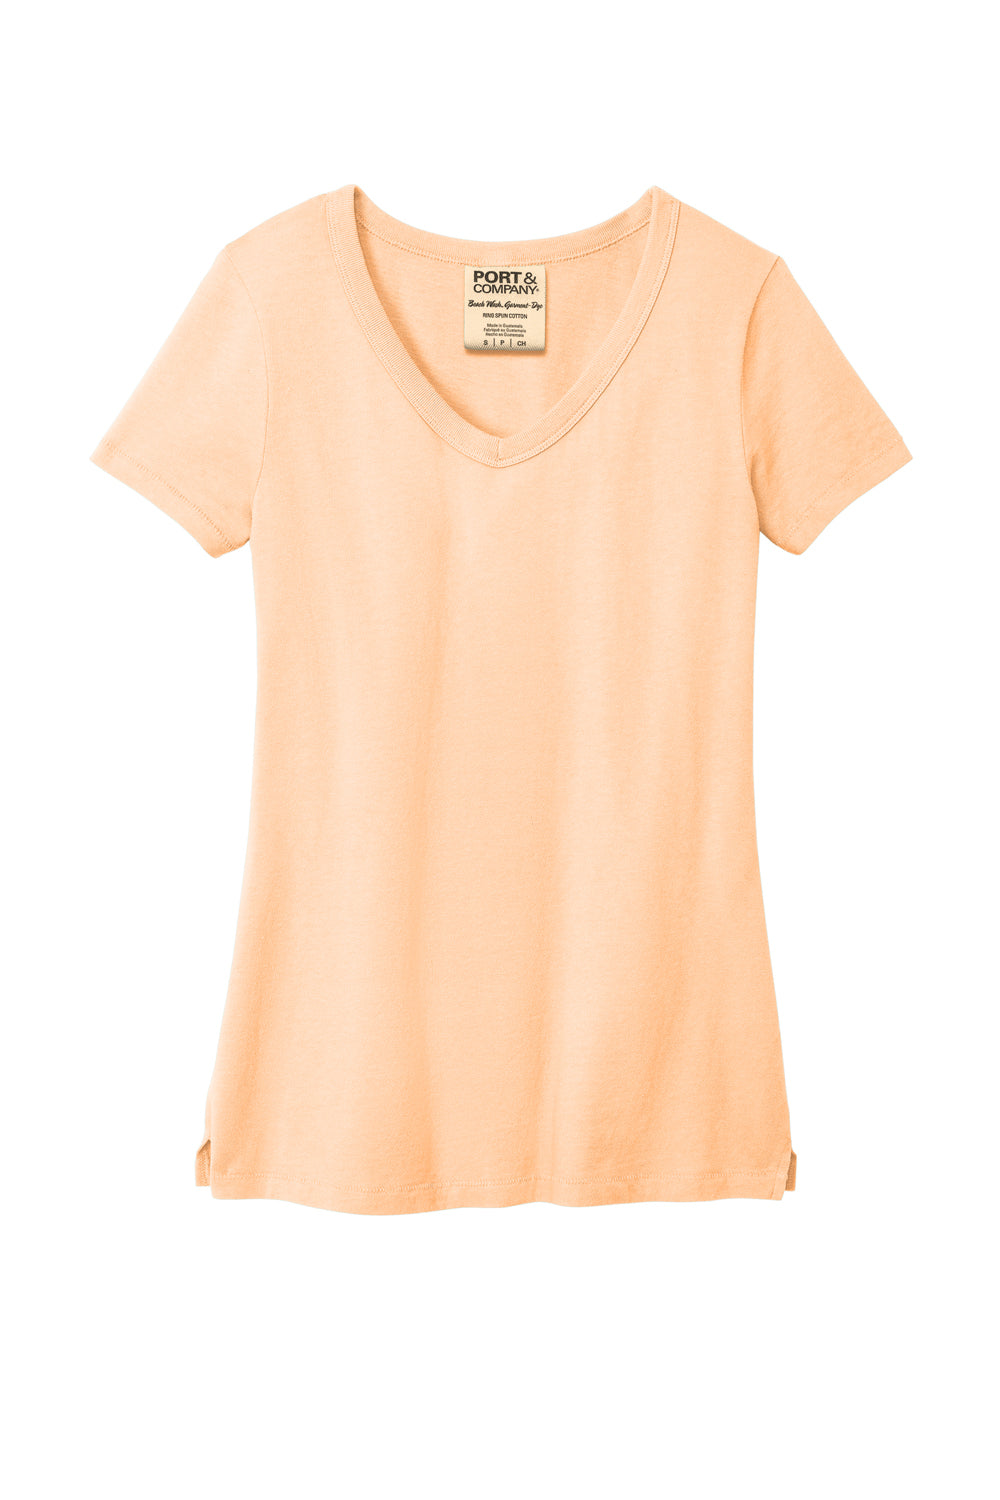 Port & Company LPC099V Womens Beach Wash Garment Dyed Short Sleeve V-Neck T-Shirt Peach Flat Front